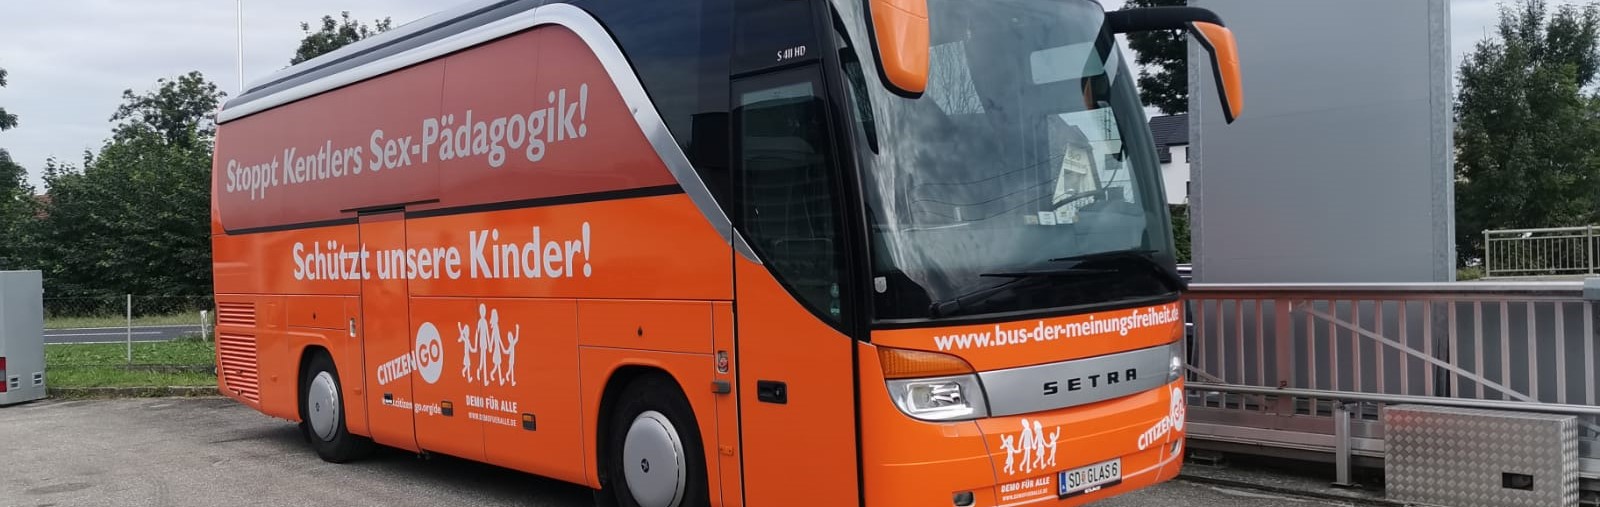 DemoFürAlle-Bustour 2020: Stoppt Kentlers Sex-Pädagogik!